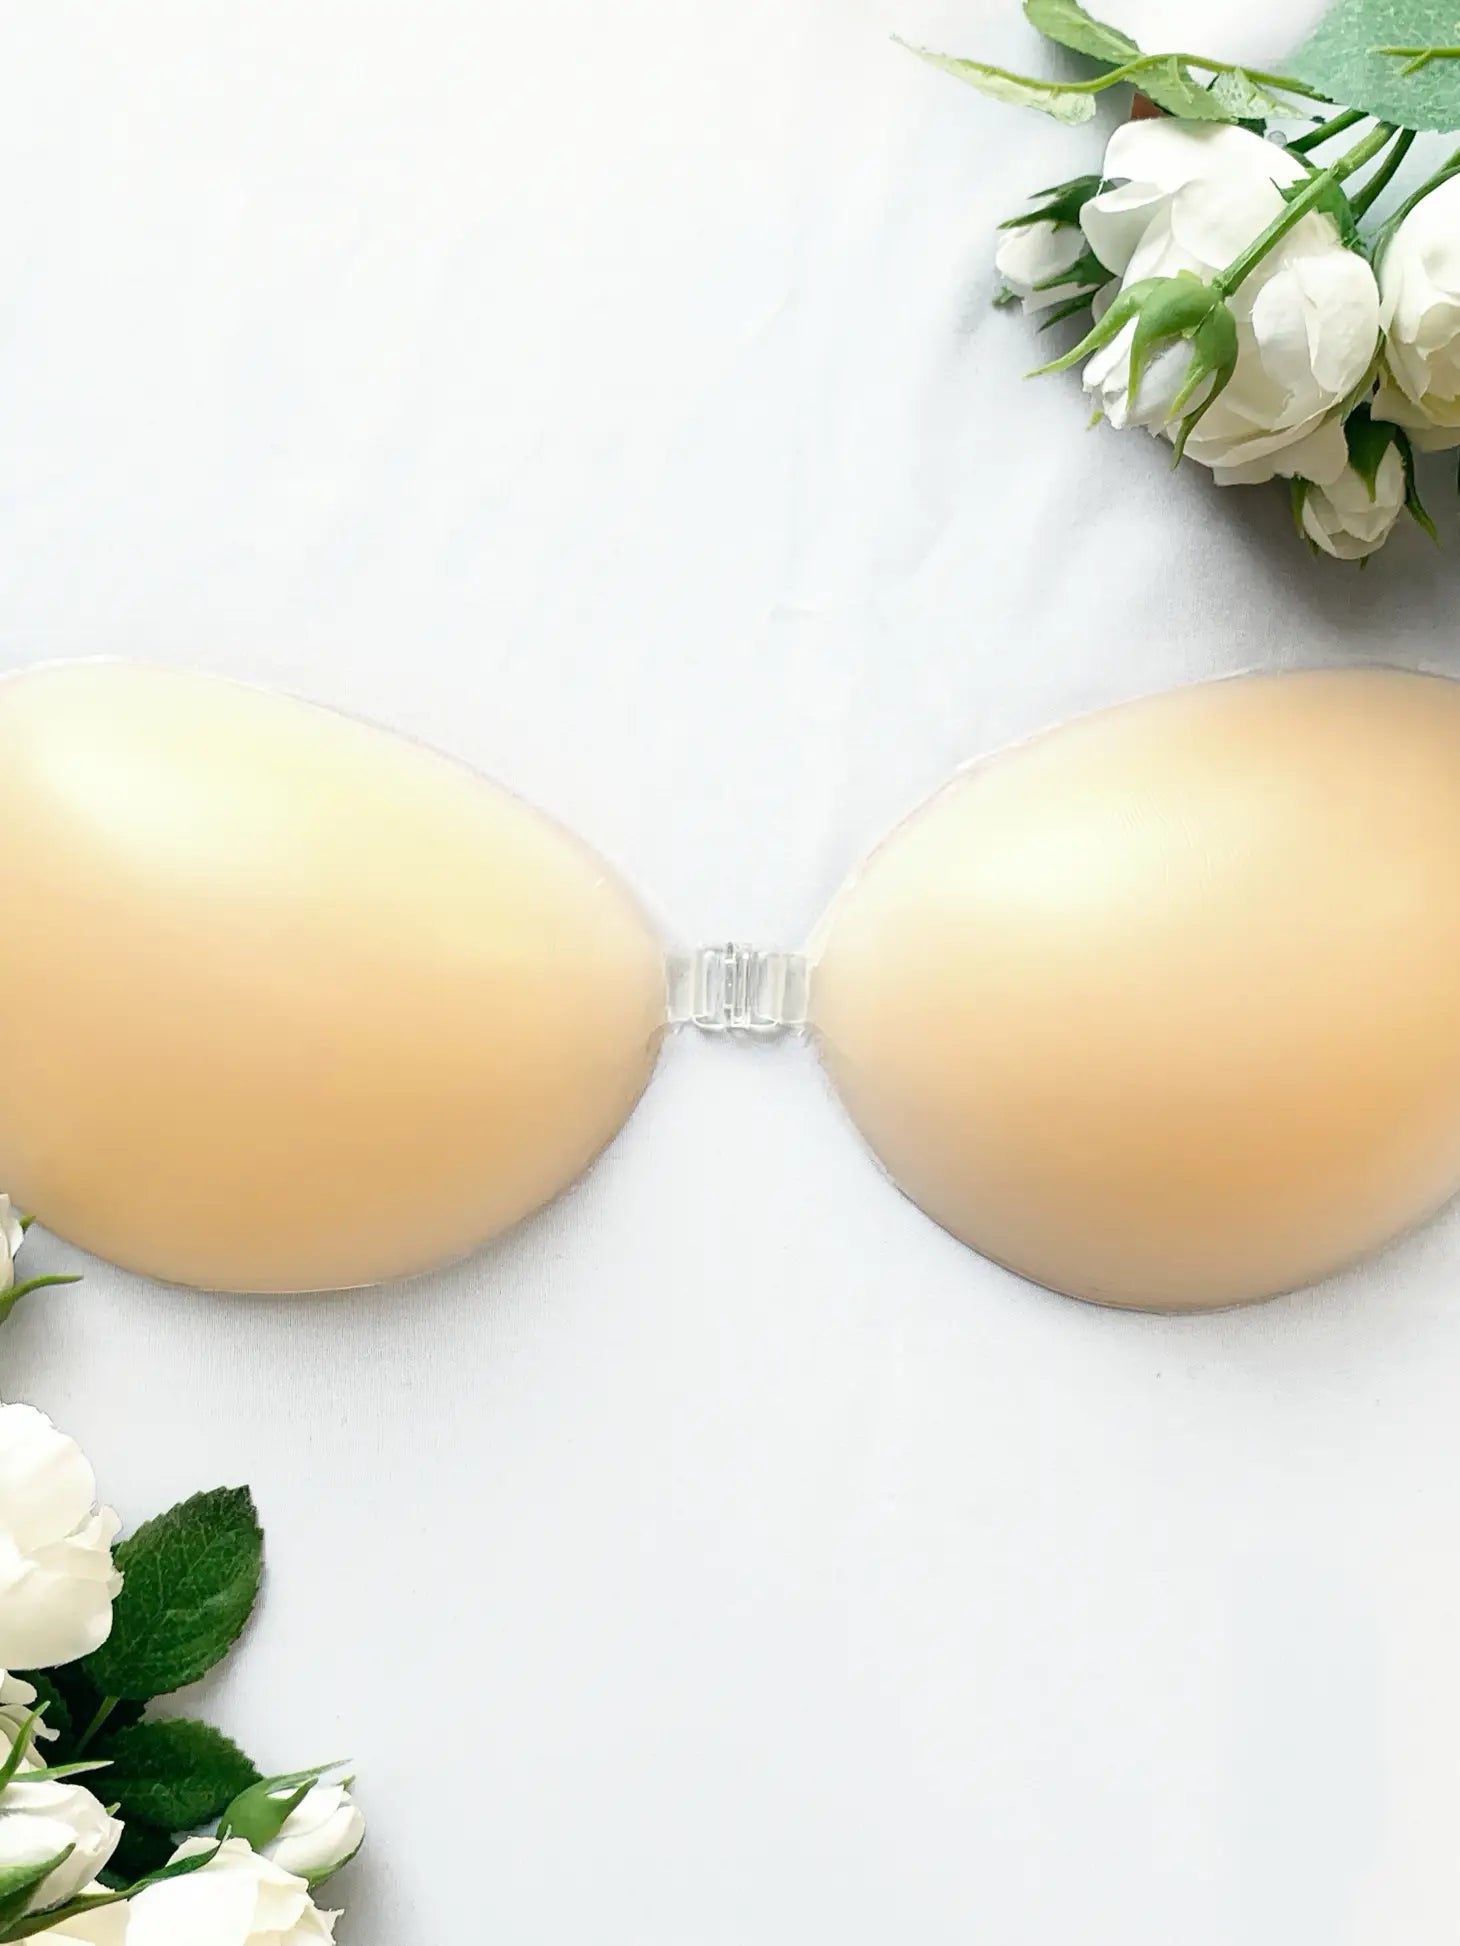 Wholesale half cup silicone bra For Supportive Underwear 